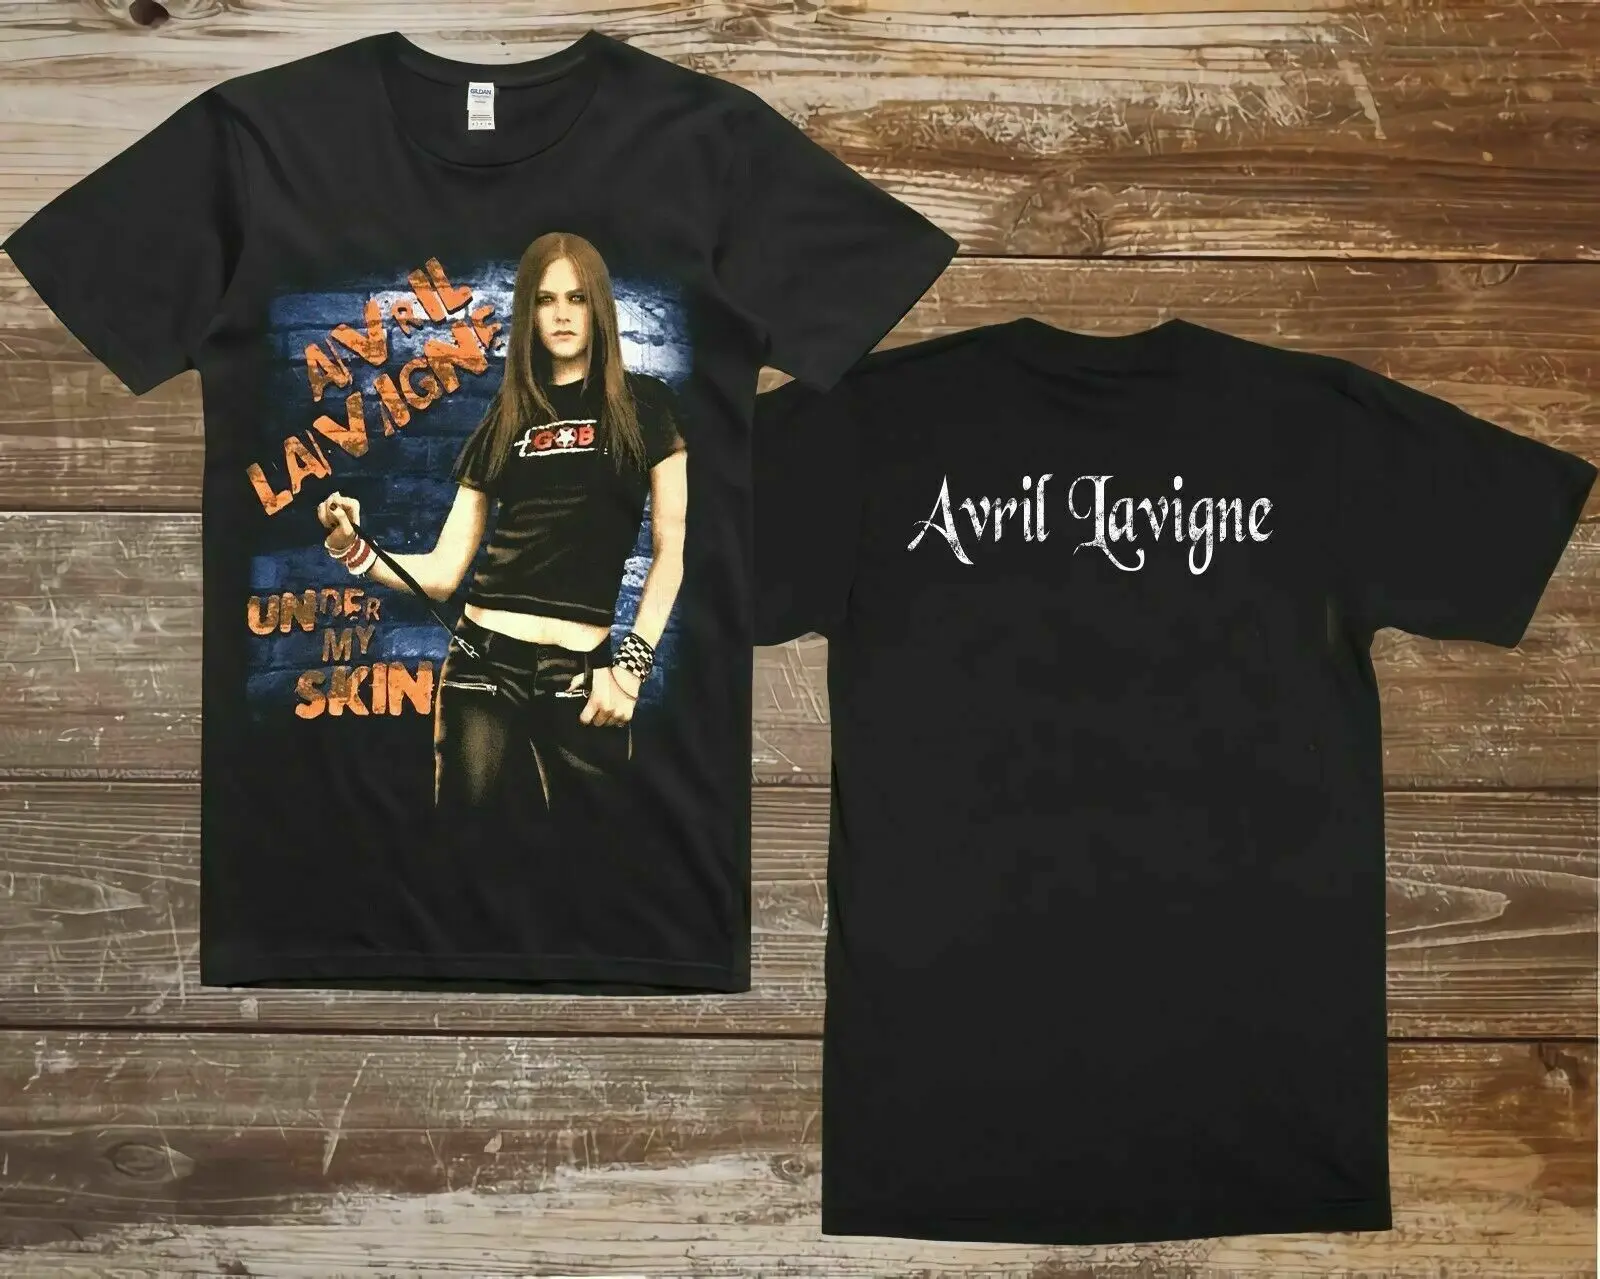 

Avril Lavigne Under My Skin Grunge Rock Tour 2004 Men's TShirt Cotton T-Shirt Short Sleeve O-Neck Cotton T Shirt Top Tee